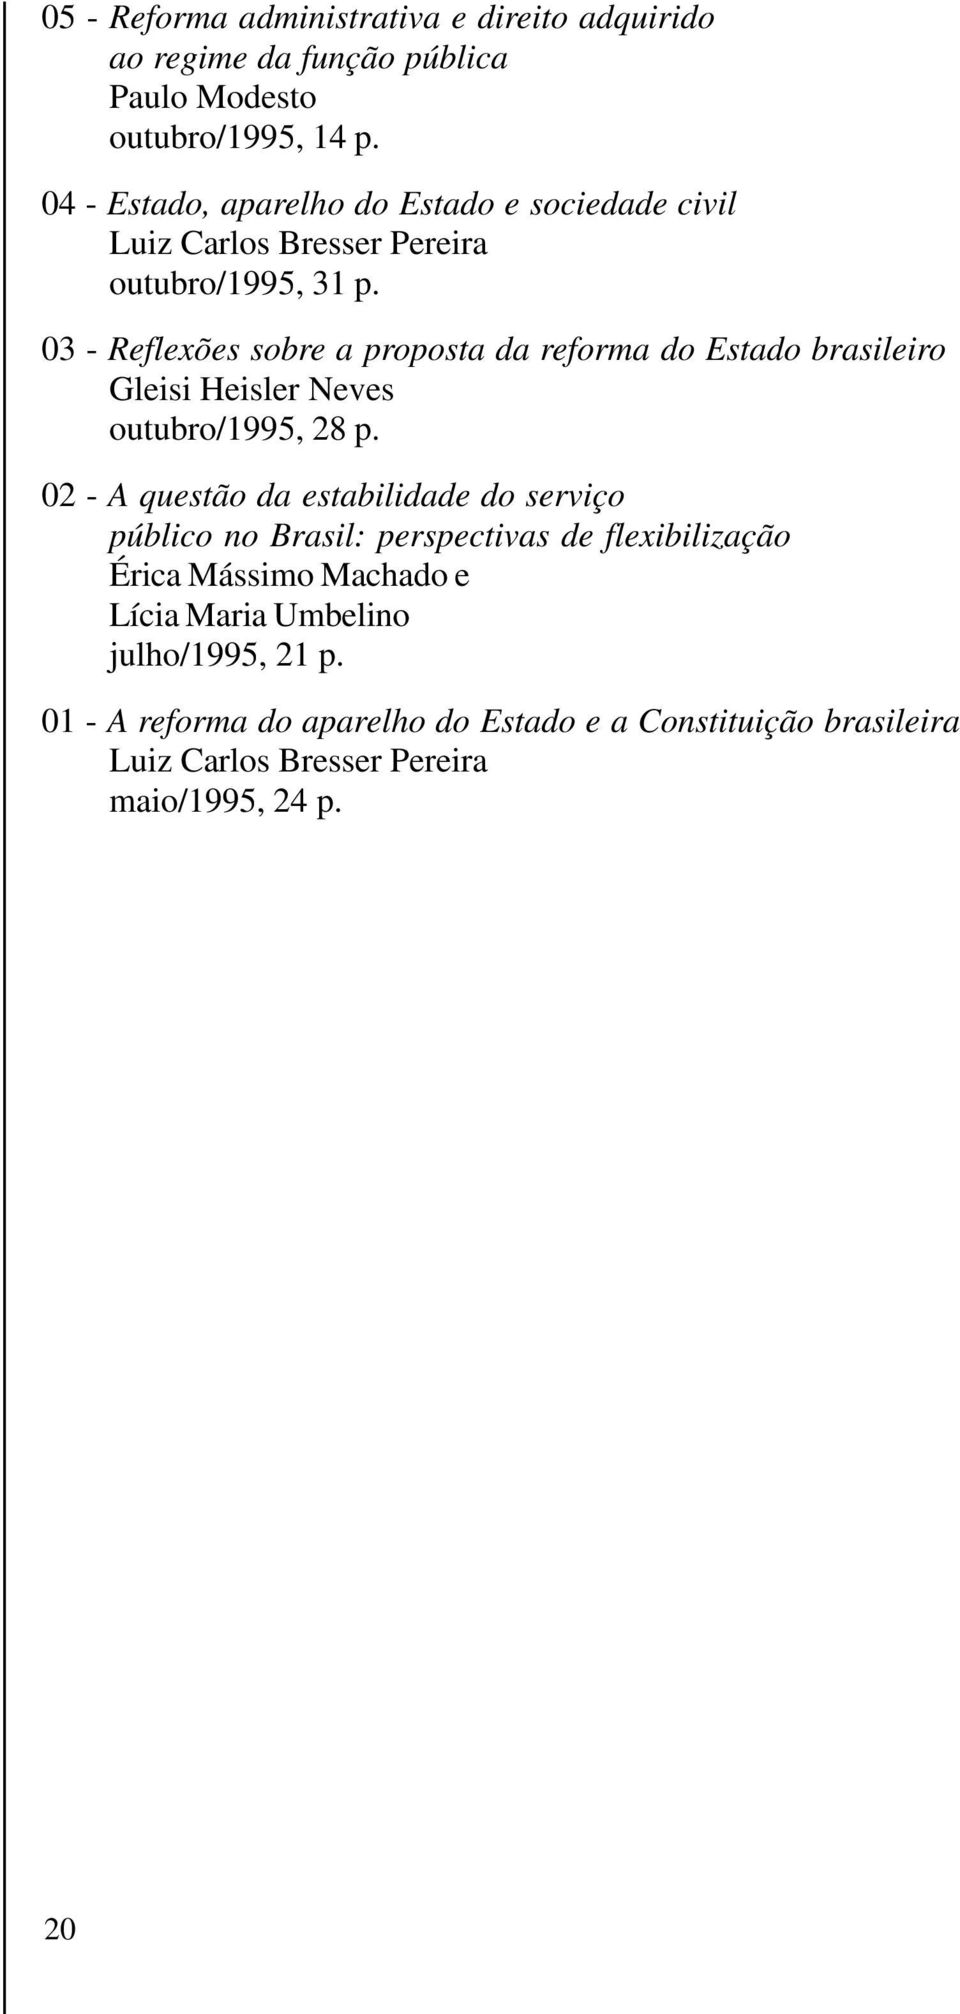 03 - Reflexões sobre a proposta da reforma do Estado brasileiro Gleisi Heisler Neves outubro/1995, 28 p.